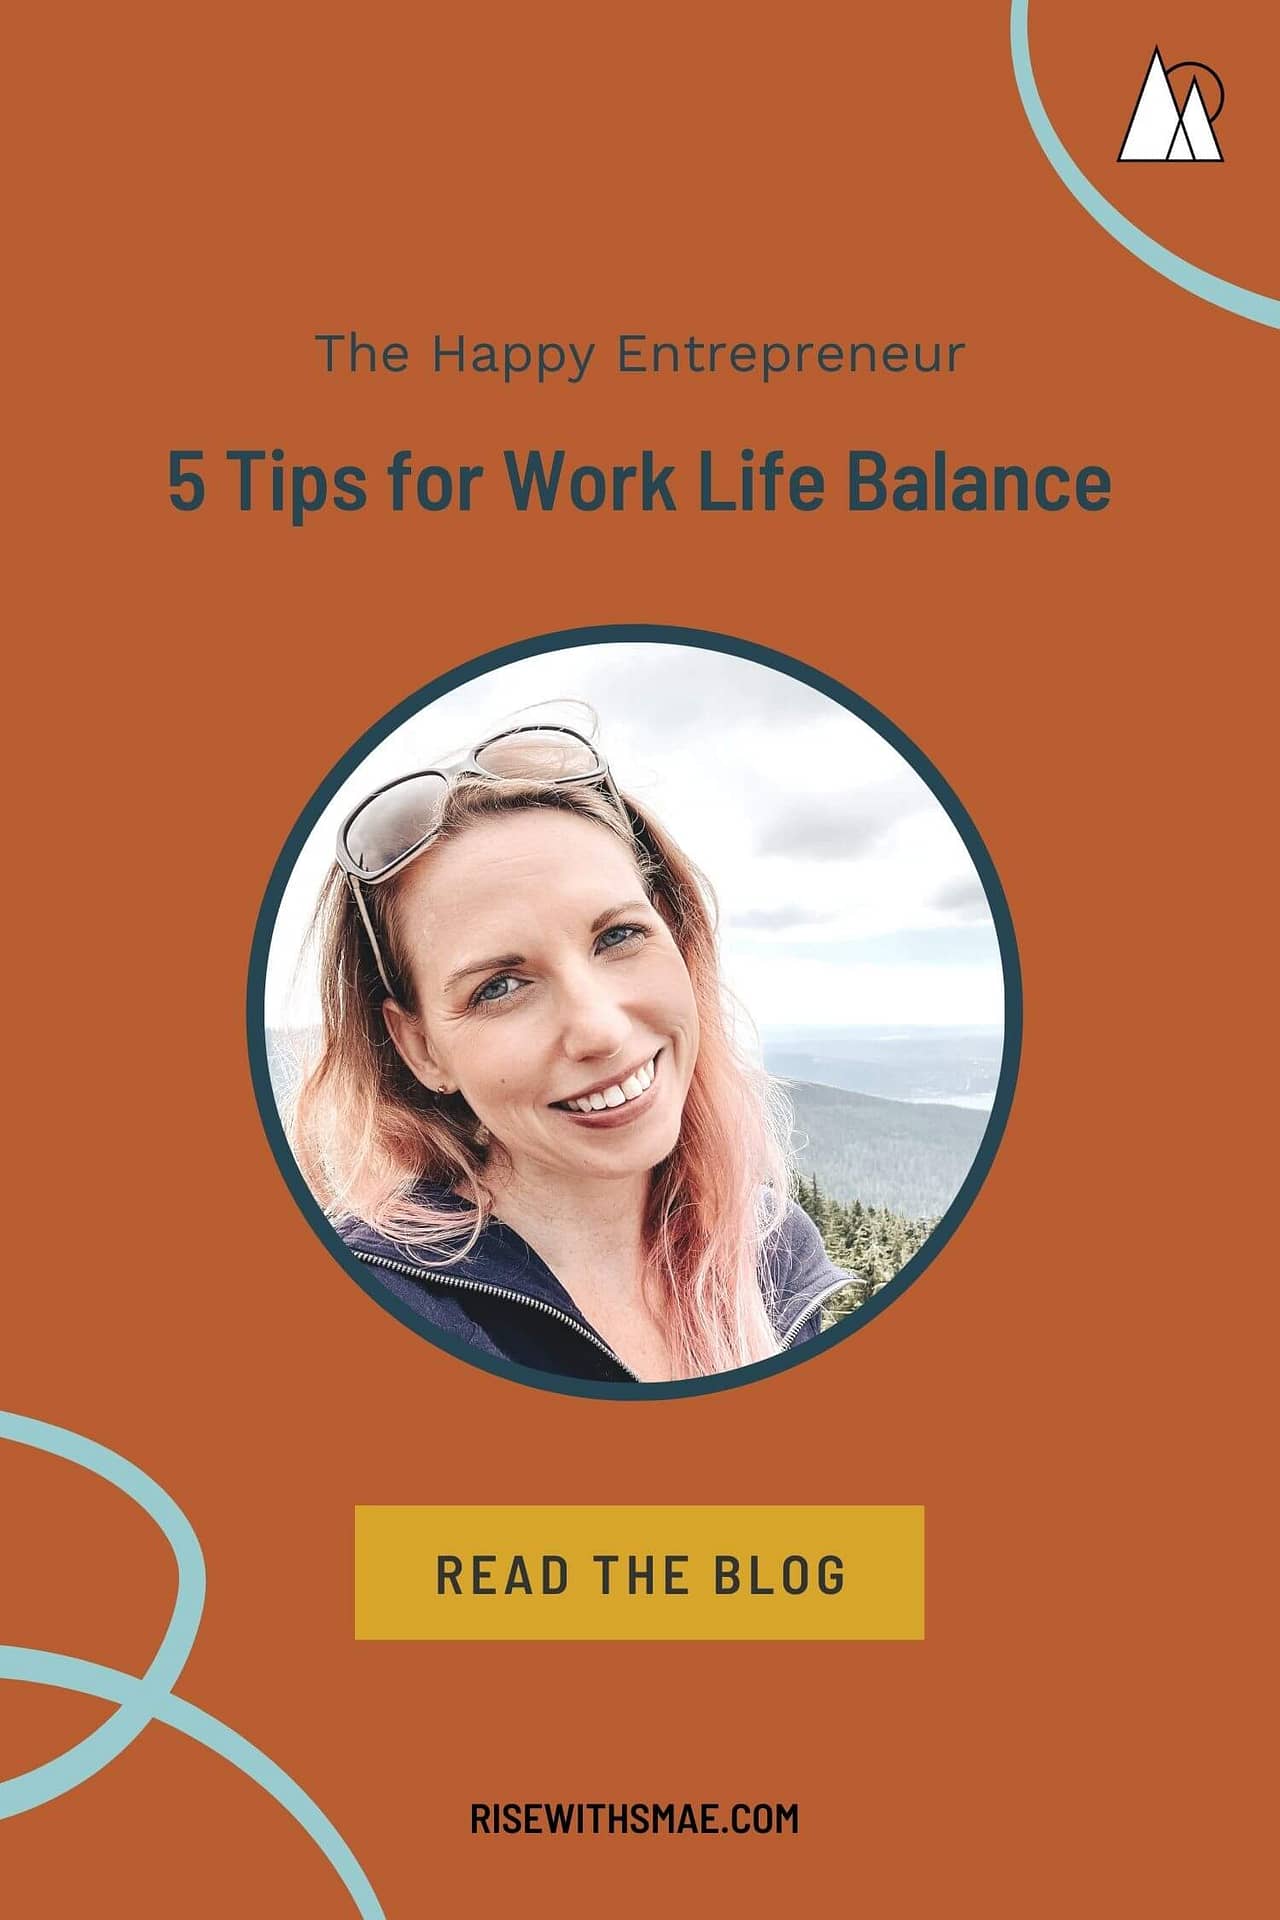 The Happy Entrepreneur: 5 Tips for Work Life Balance